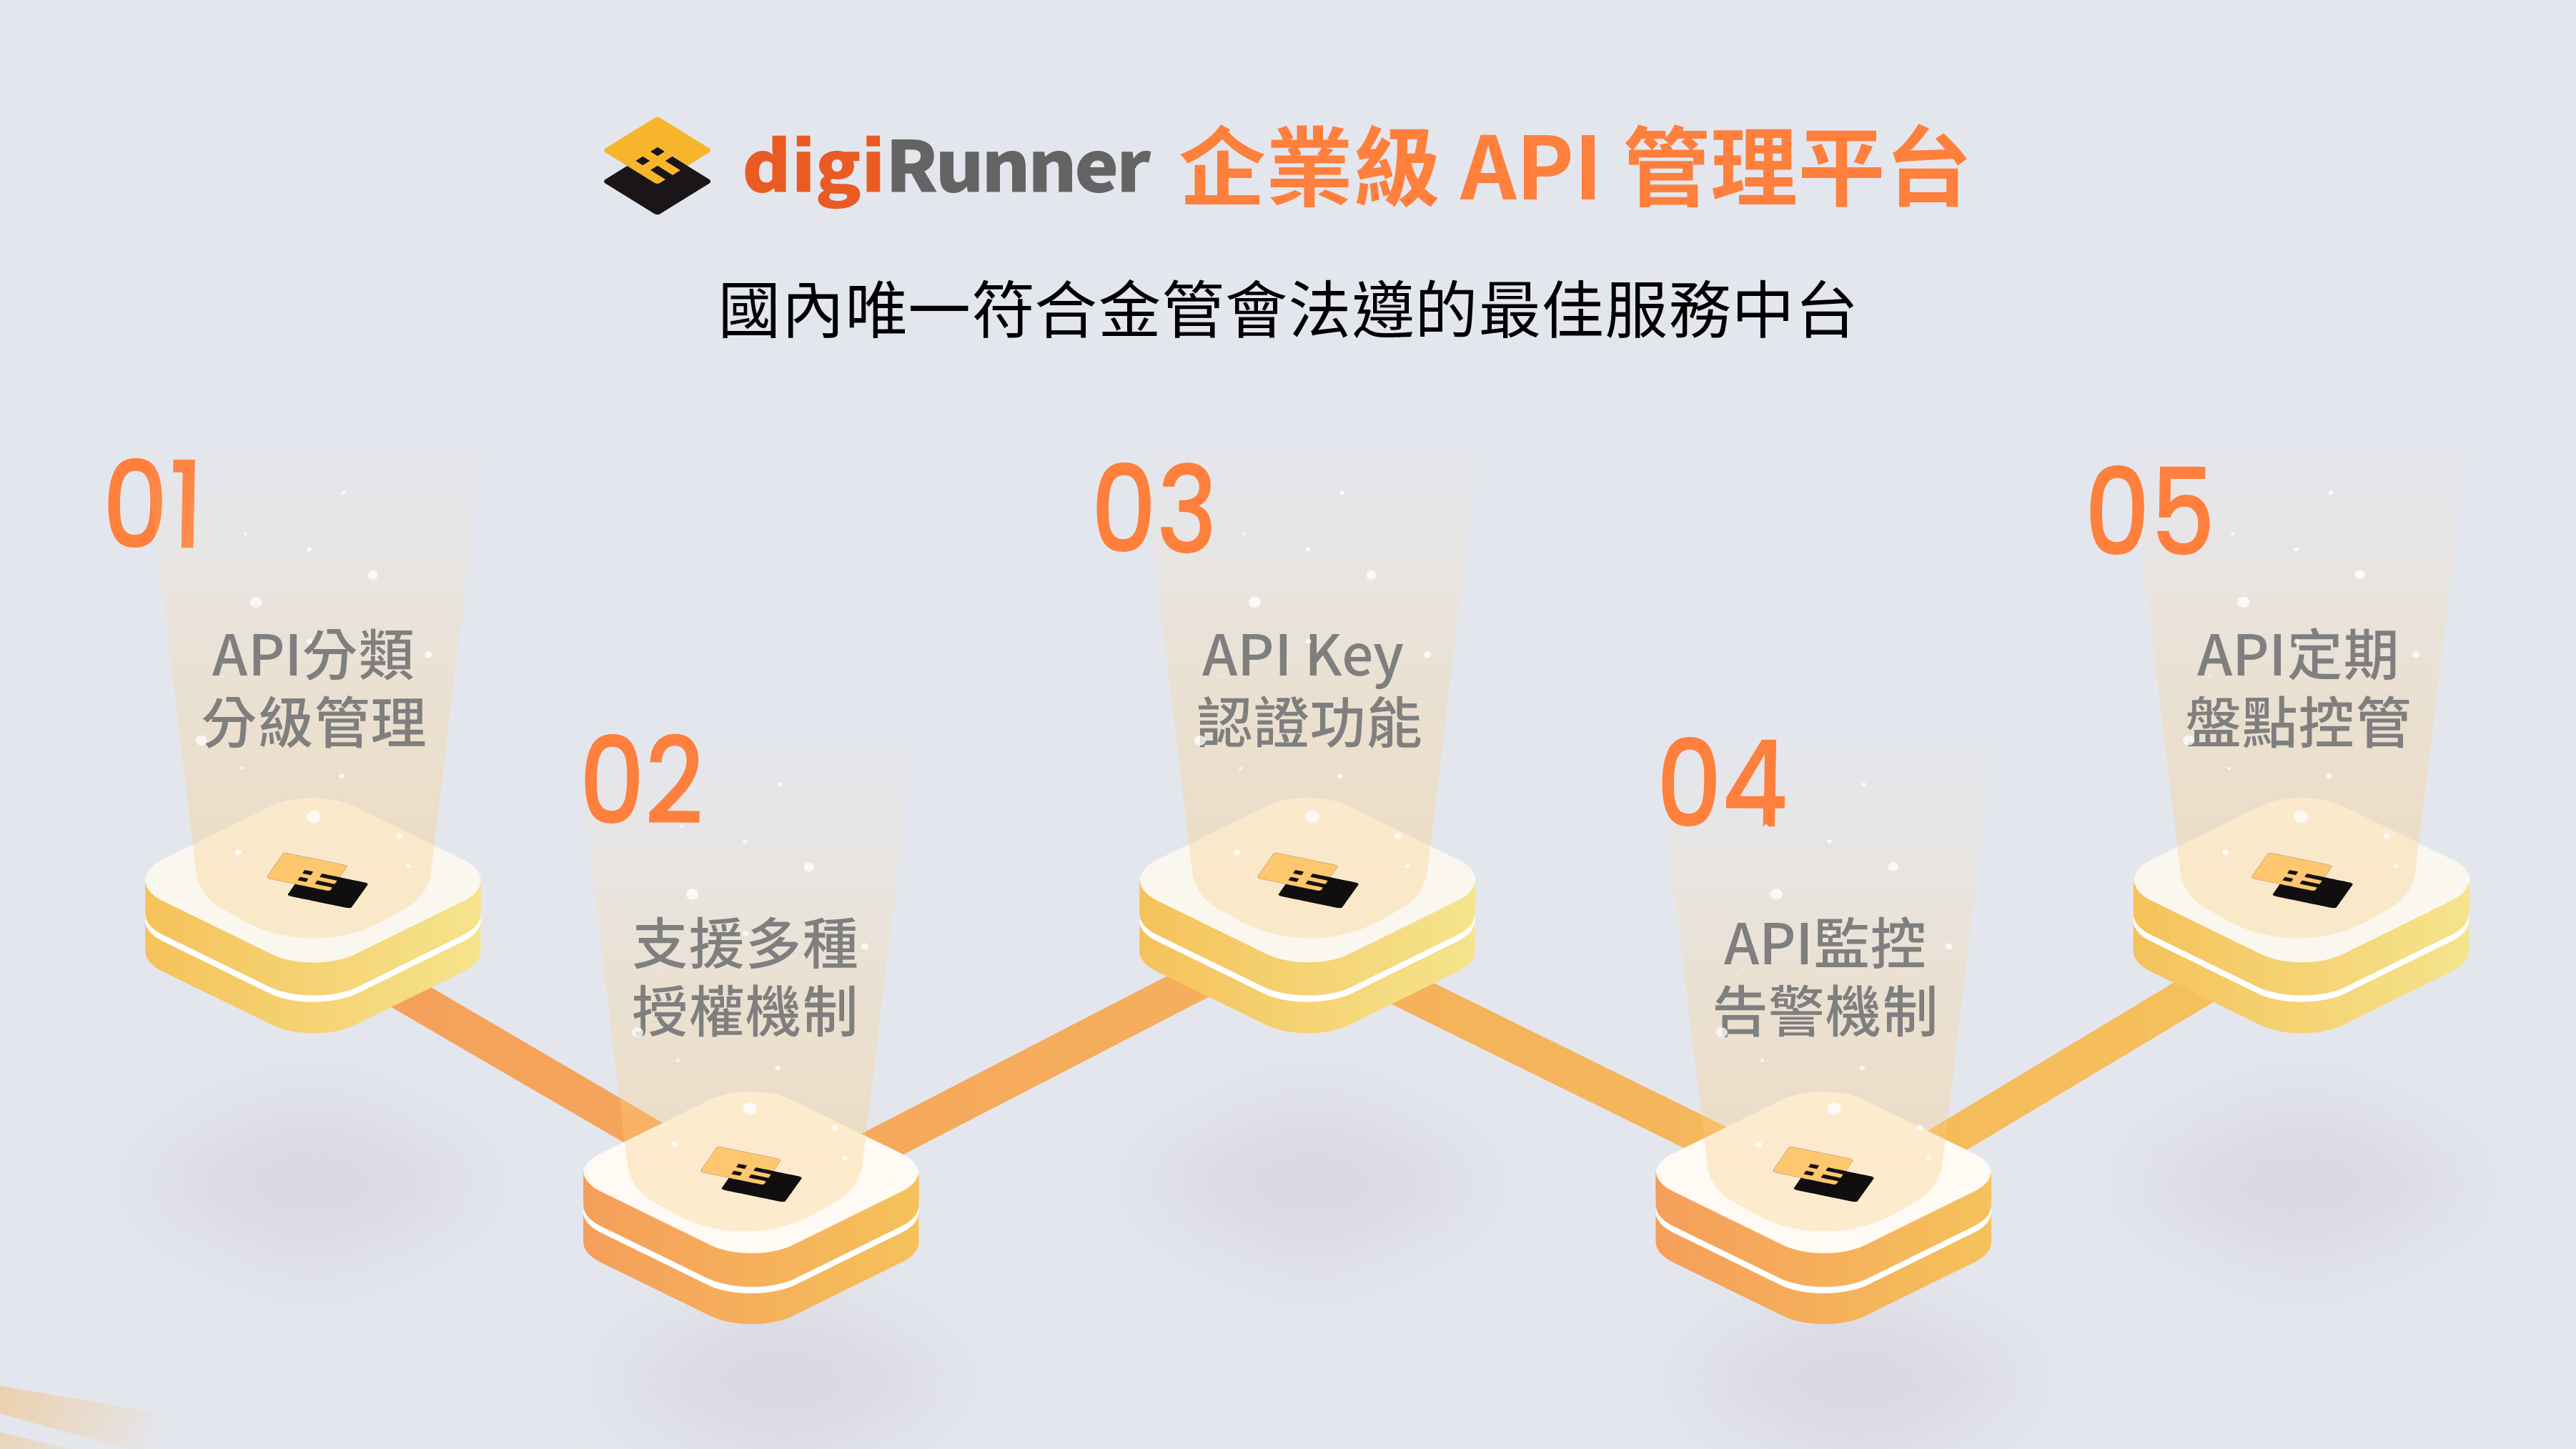 digiRunner API管理平台（APIM Platform），企業遵循金管會金檢規則的最佳管道